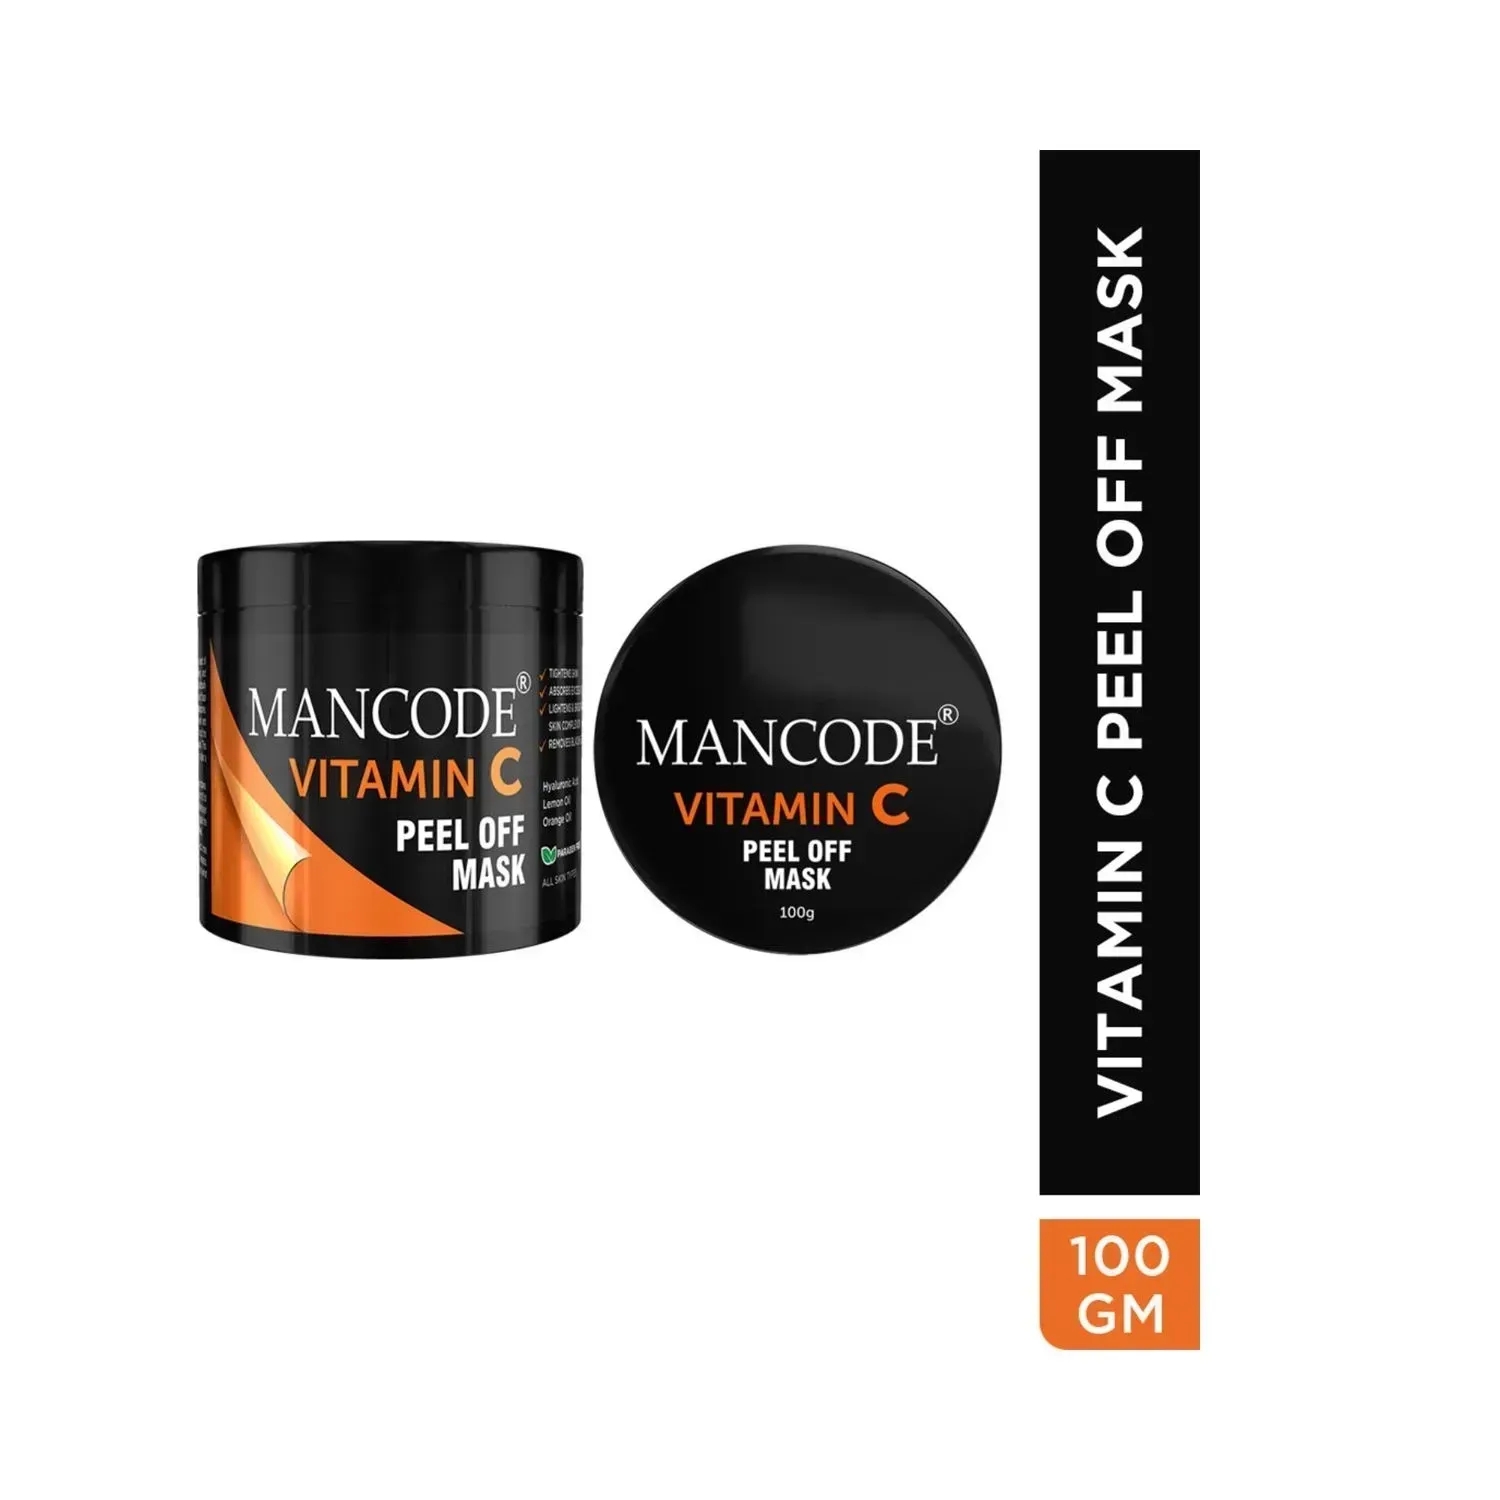 Mancode | Mancode Vitamin C Peel Off Mask - (100g)